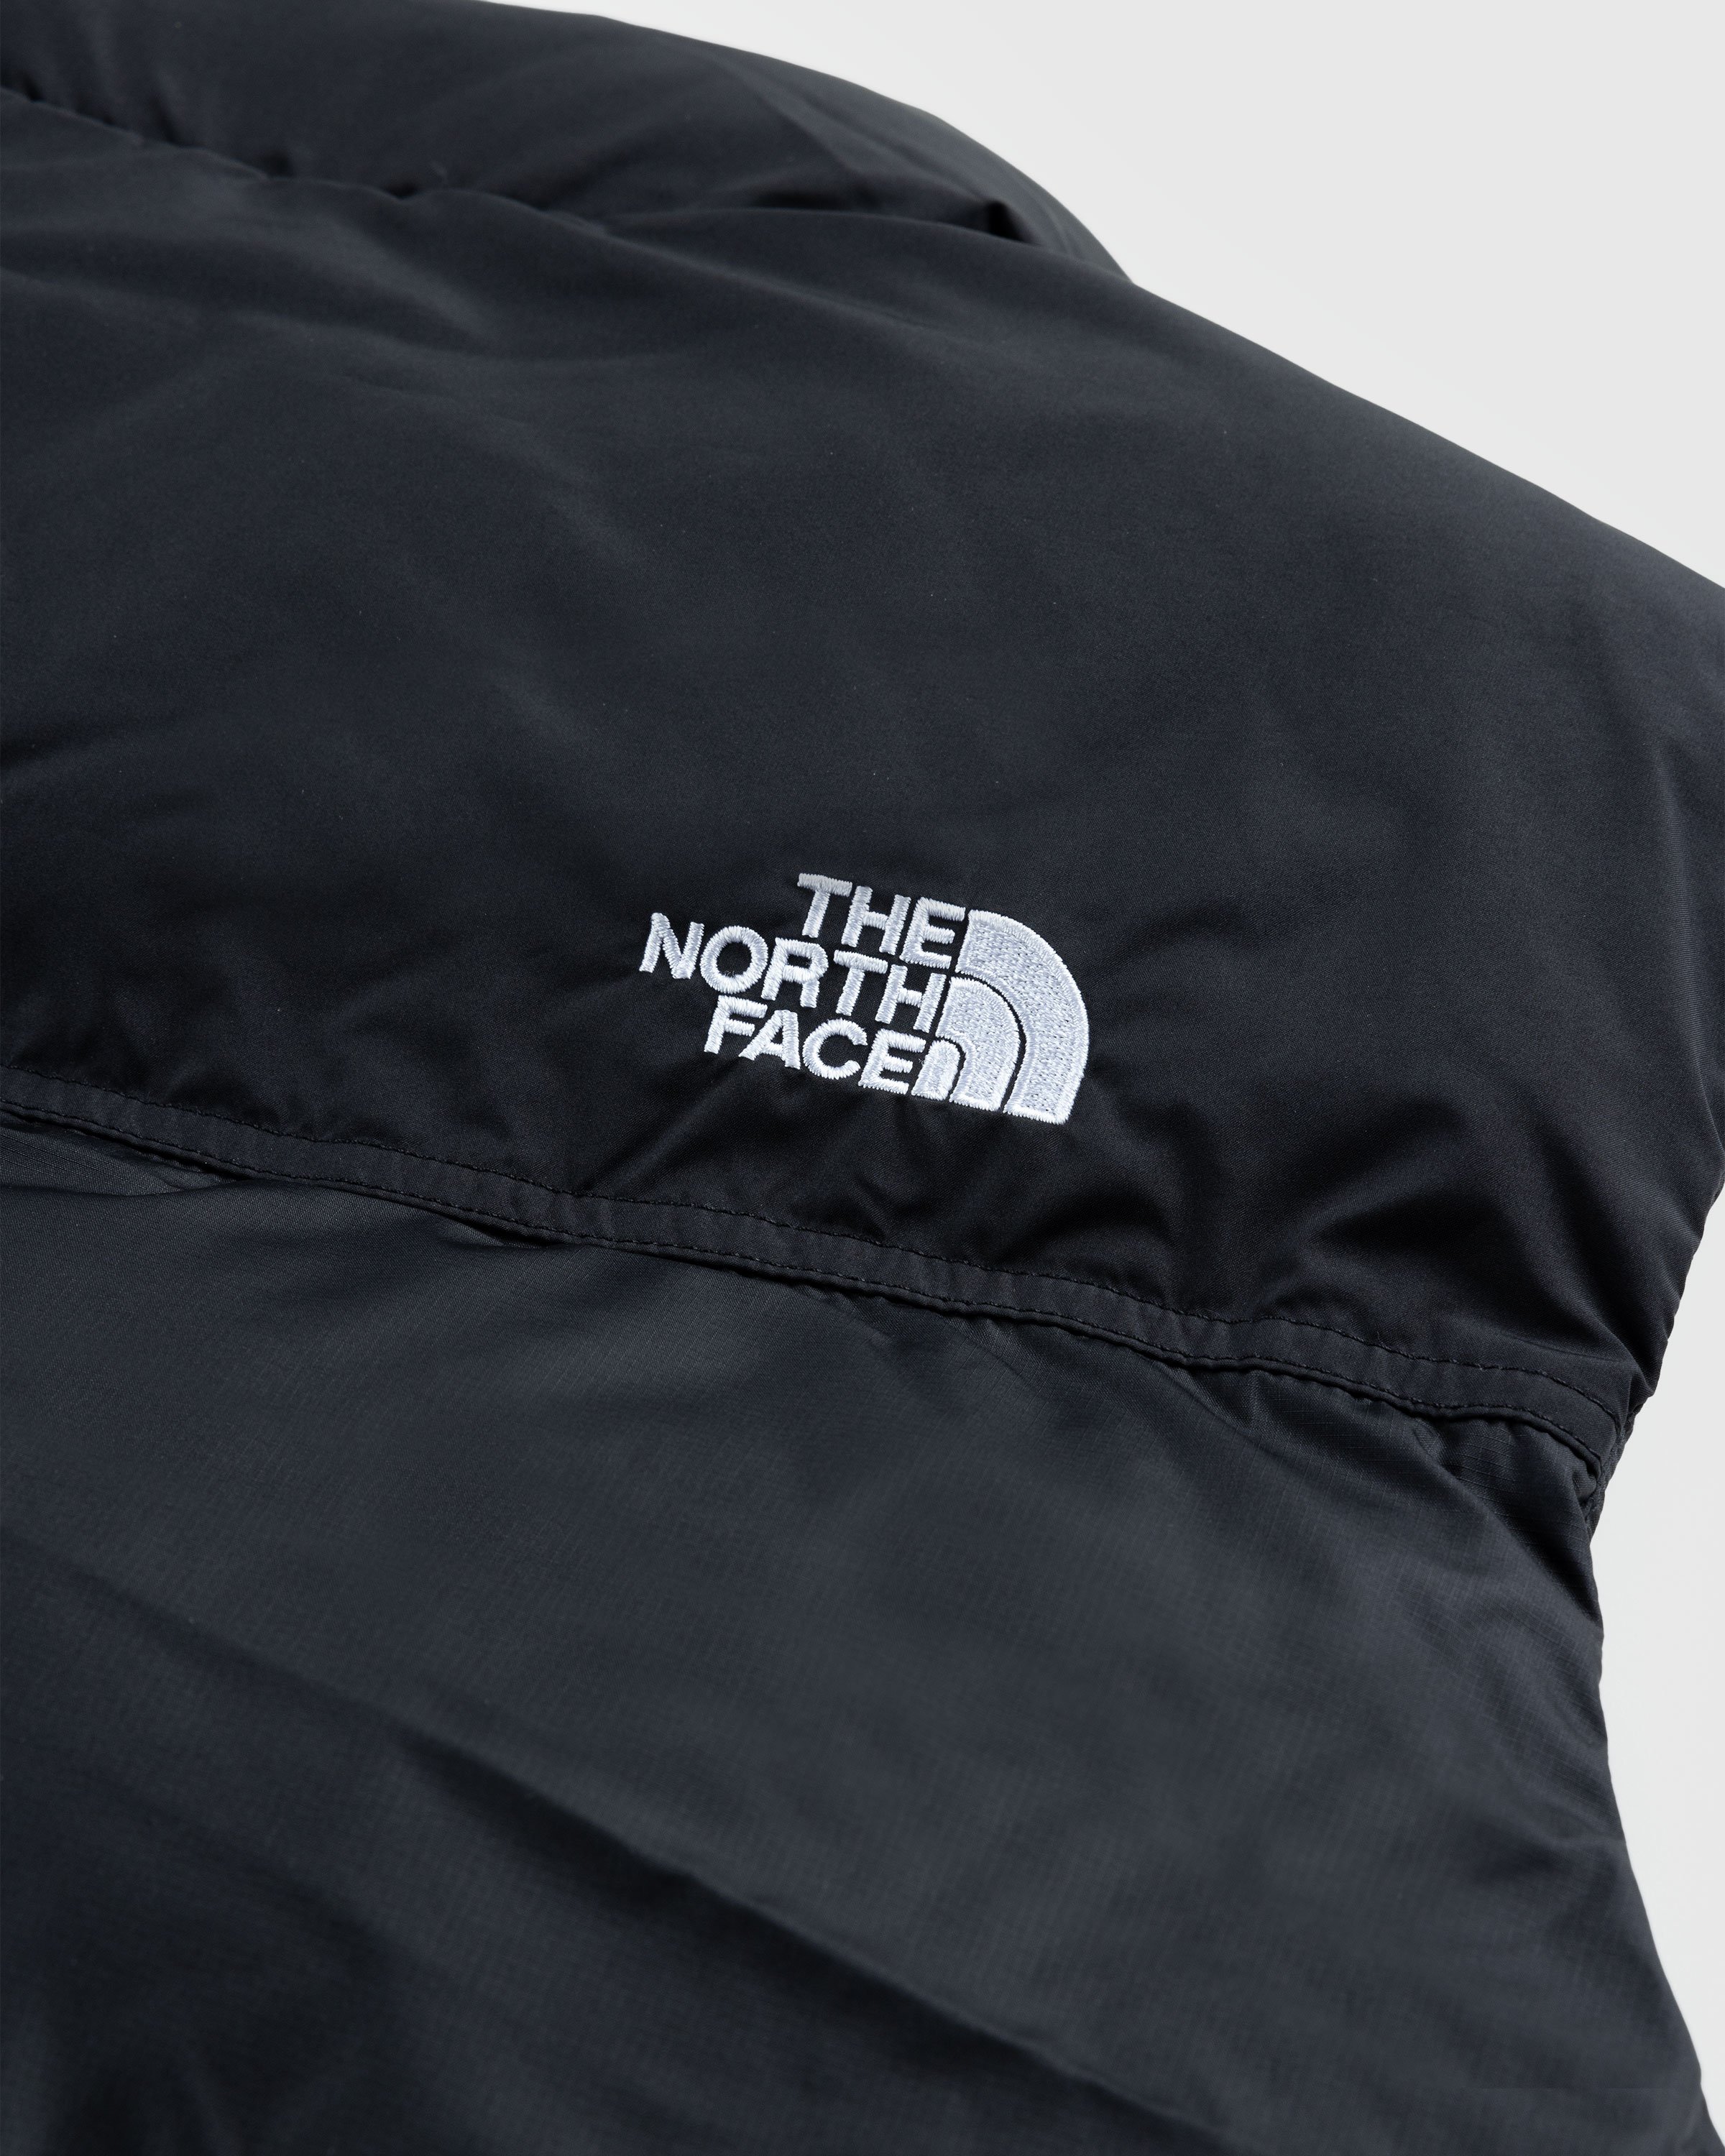 The North Face - M SAIKURU VEST - Clothing - Black - Image 7